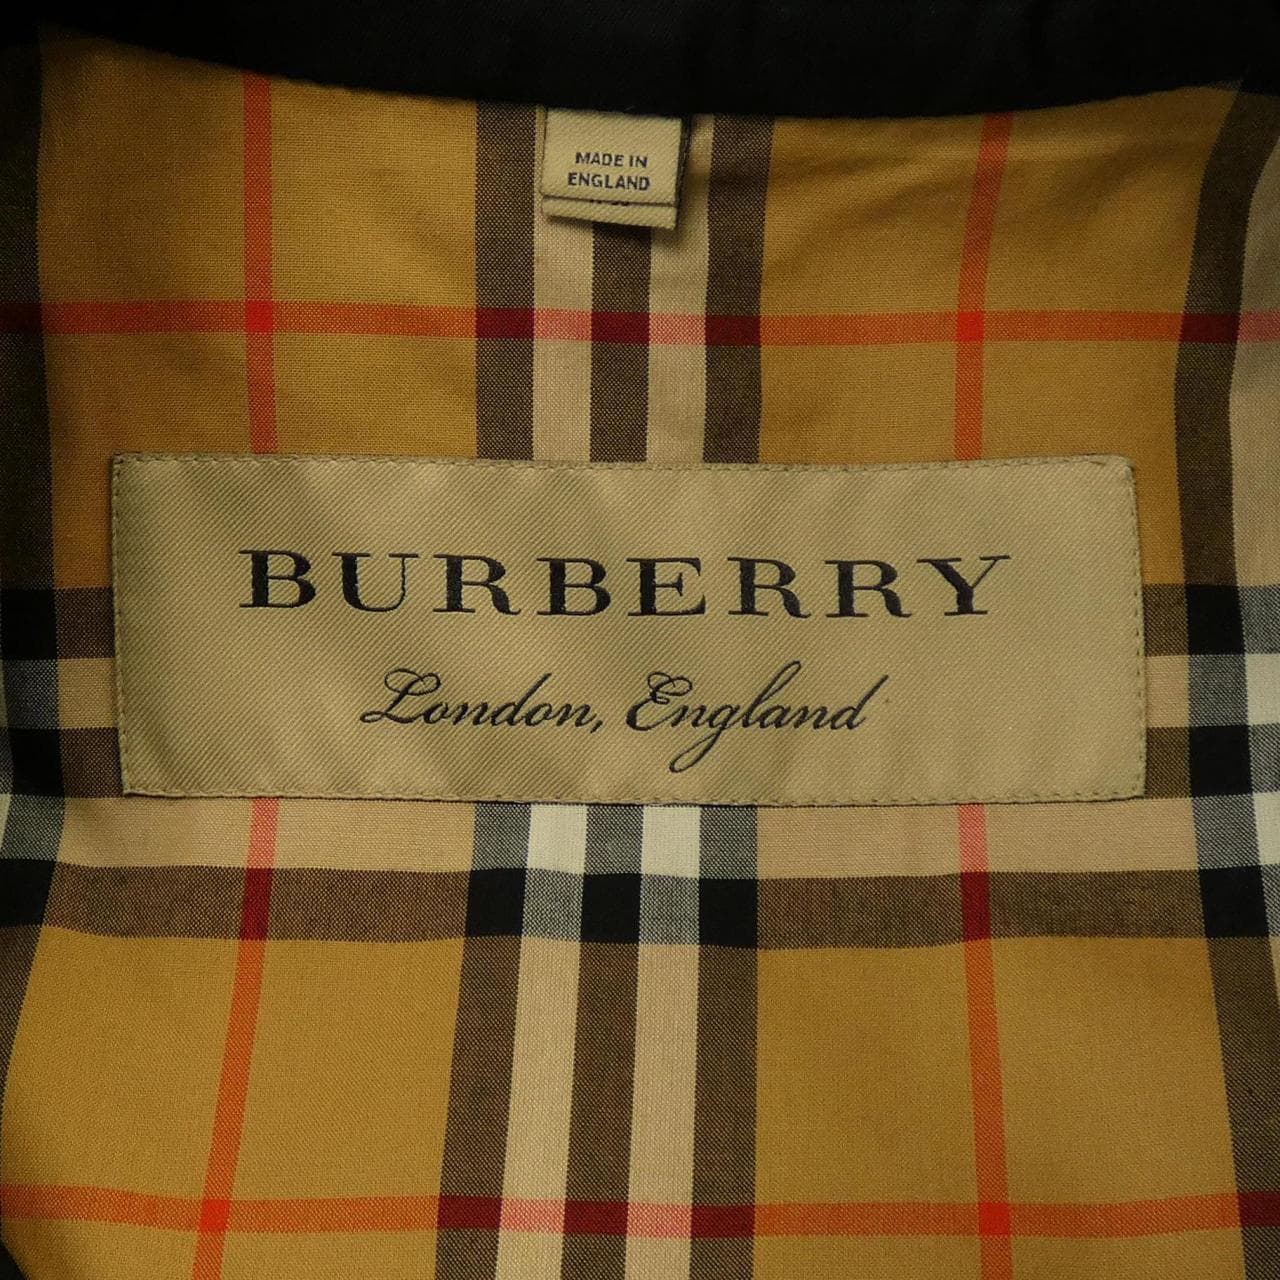 BURBERRY Burberry trench coat